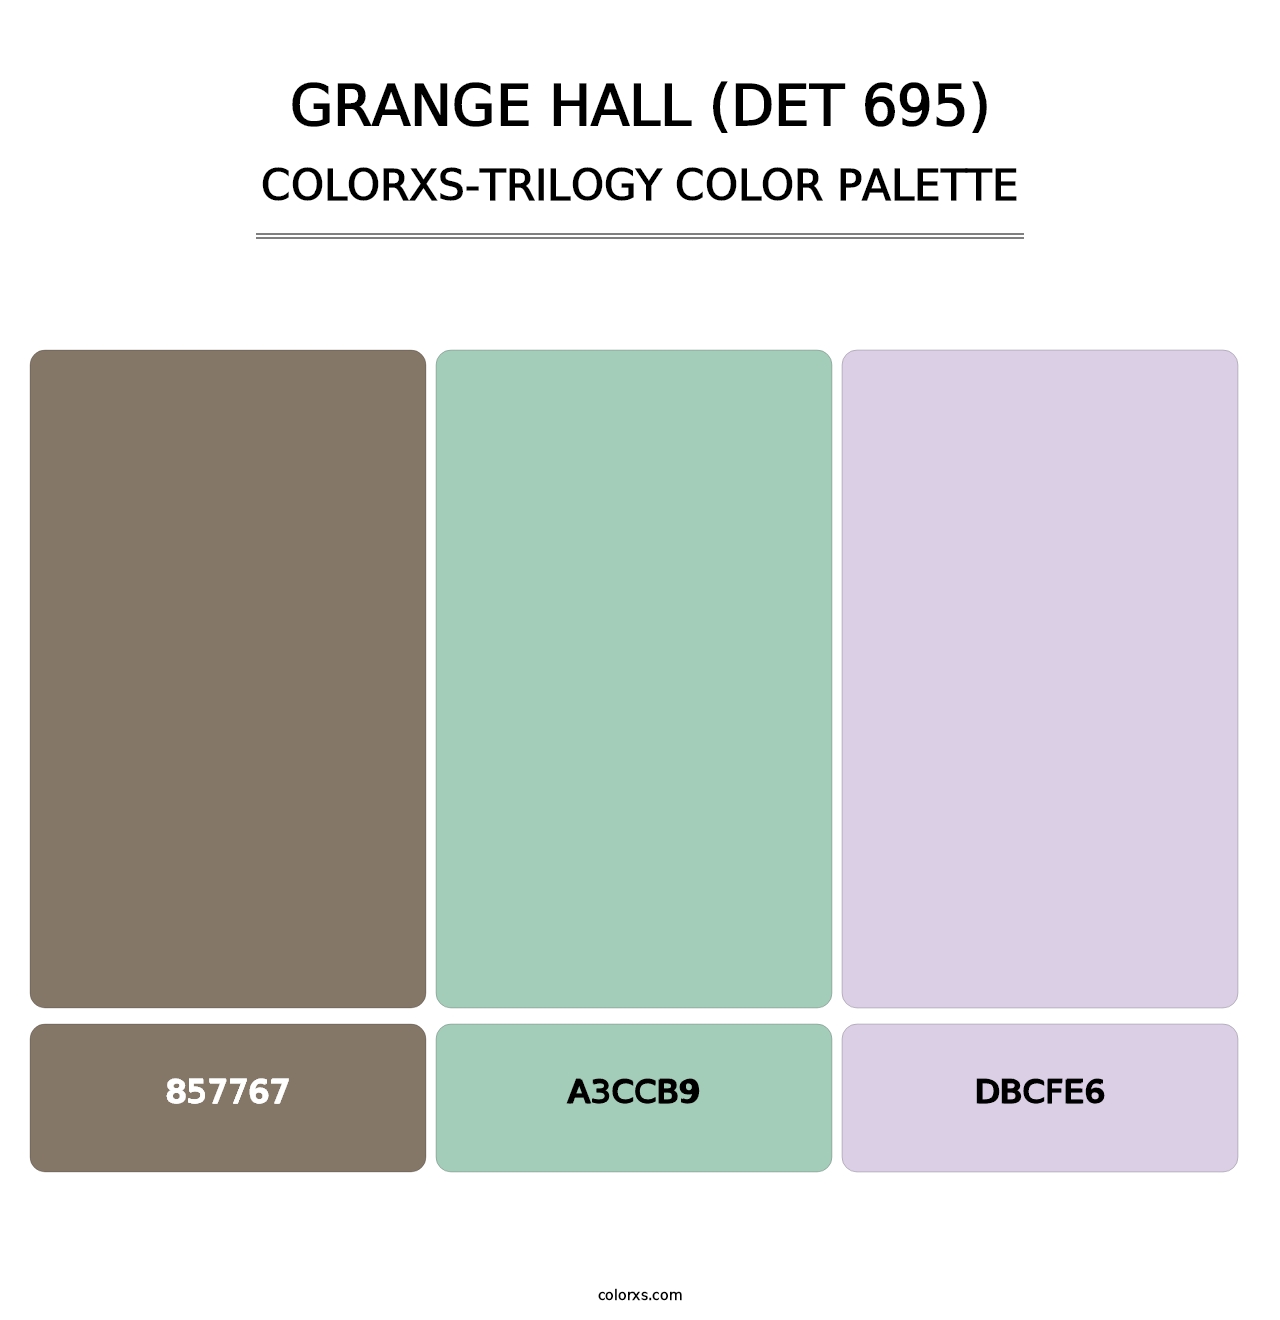 Grange Hall (DET 695) - Colorxs Trilogy Palette